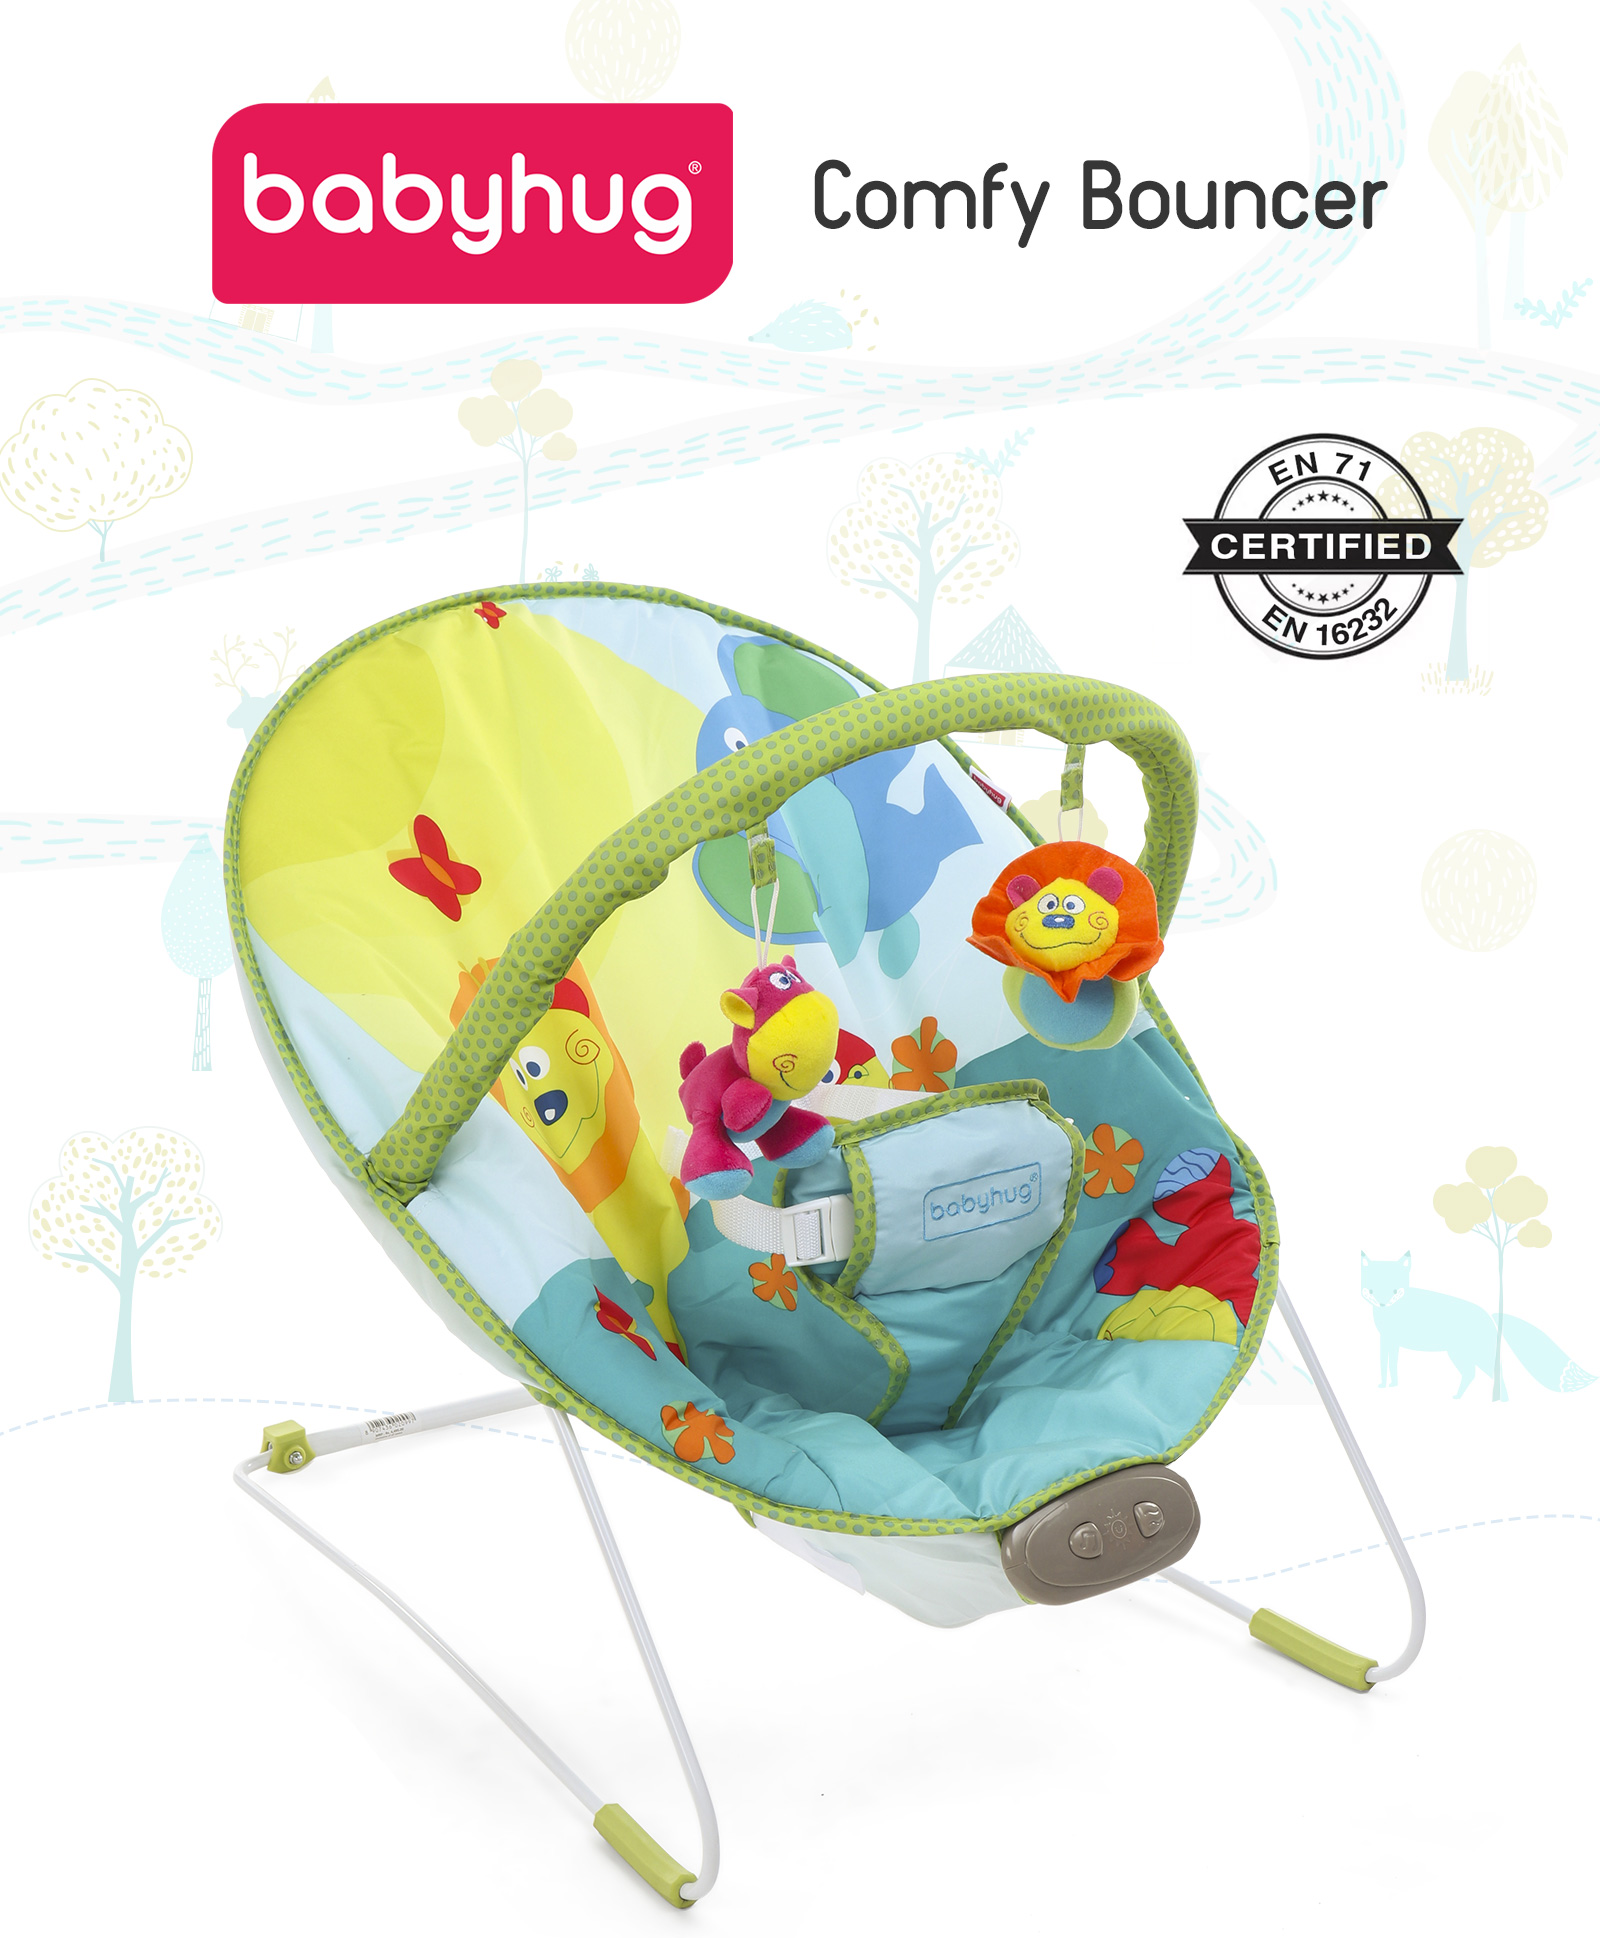 babyhug comfy bouncer